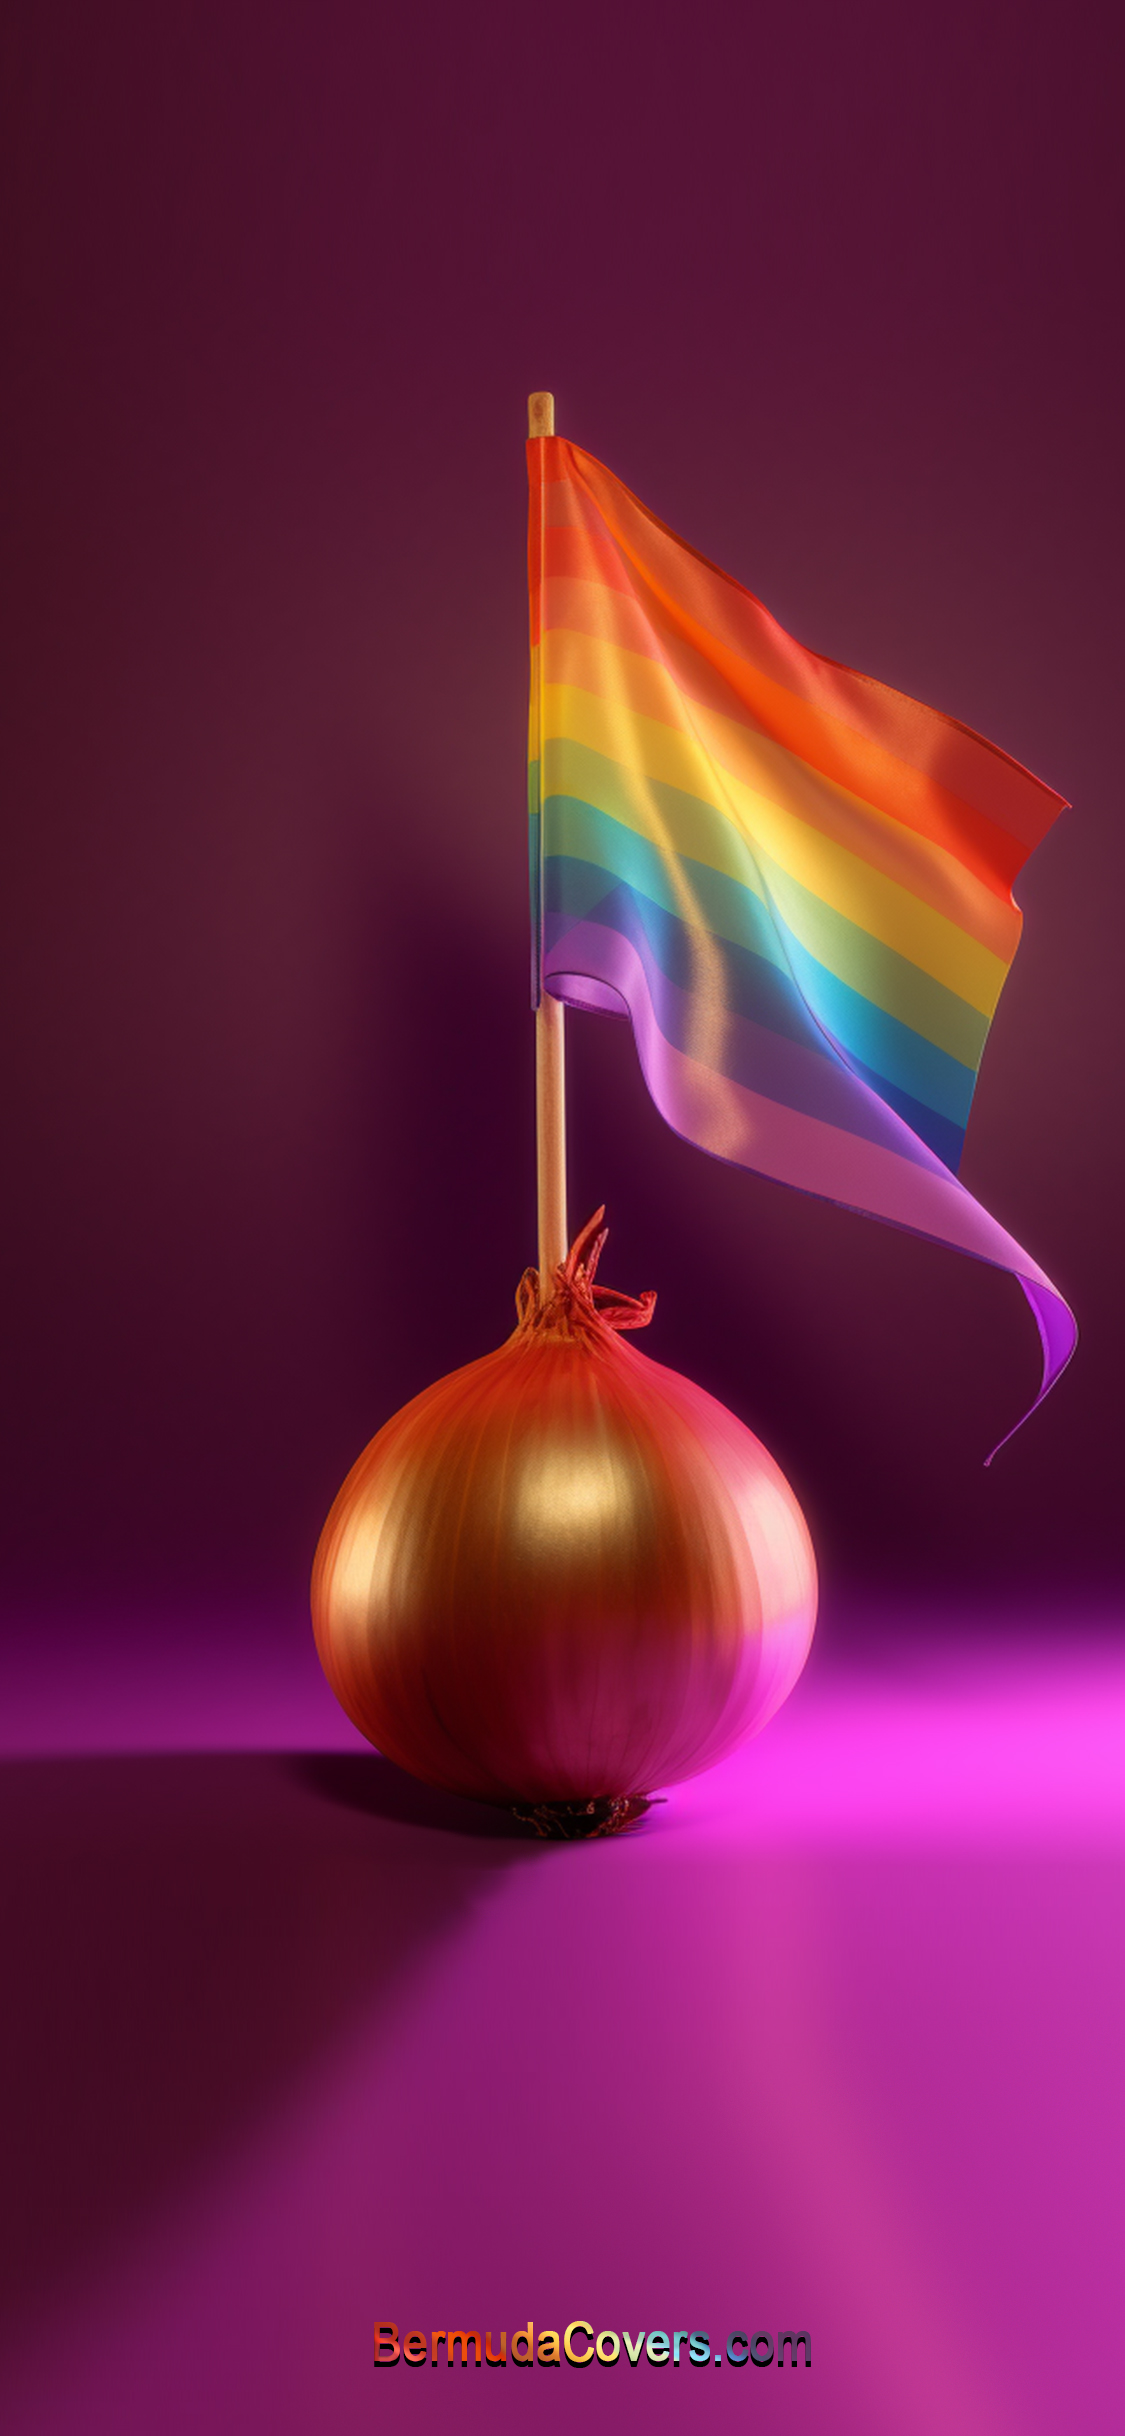 Bermuda Onion LGBTQ Pride Flag design social media graphic 239848923 phone wallpaper copy